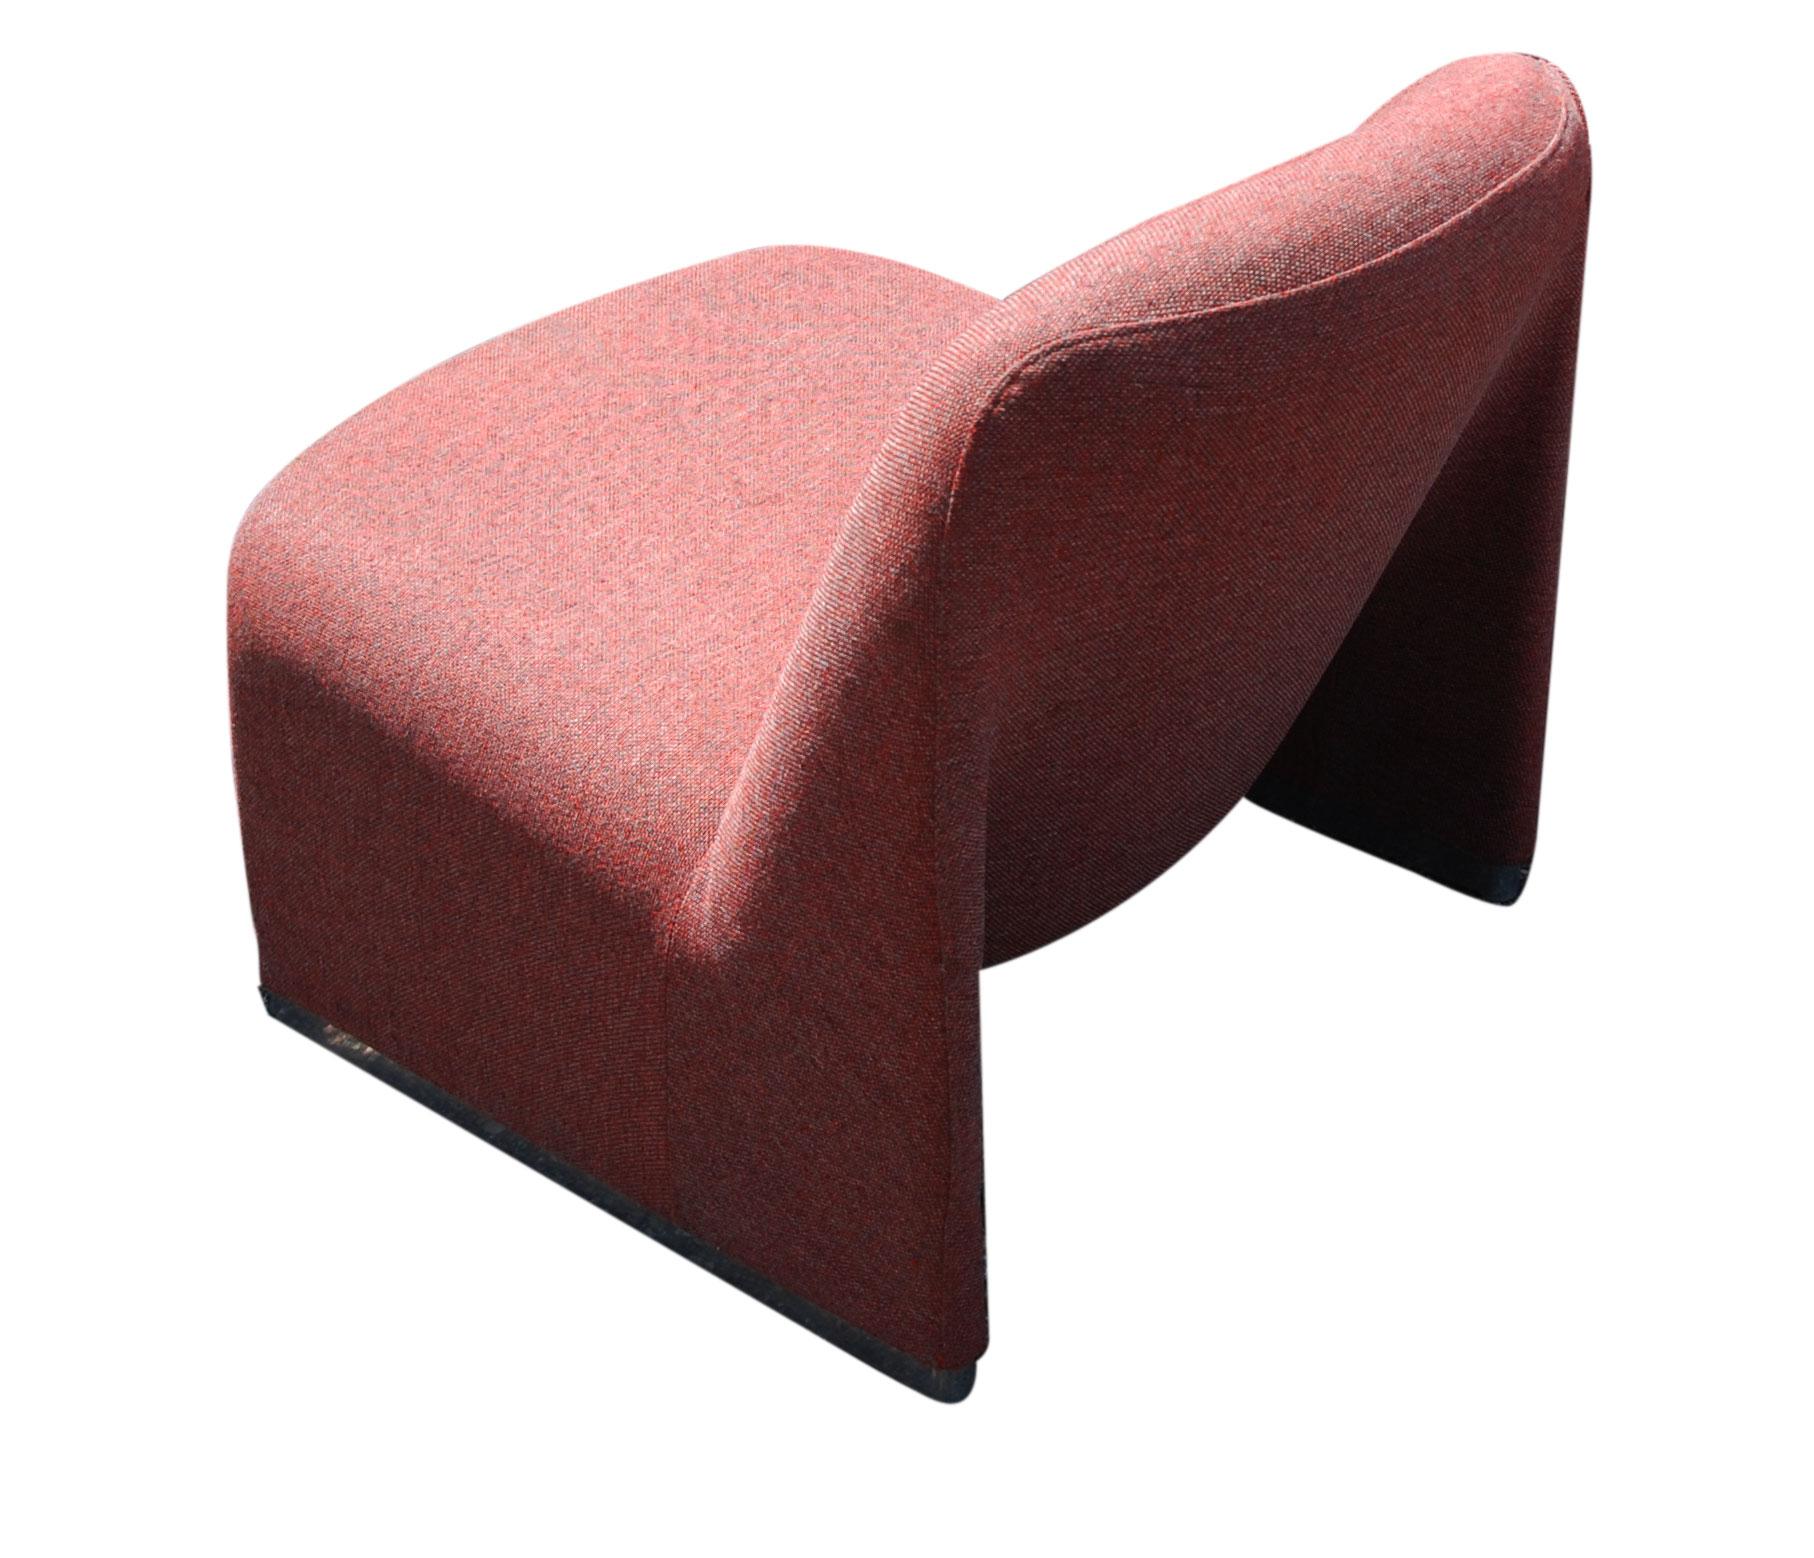 Mid-Century Modern 1970s Giancarlo Piretti “Alky” Chair